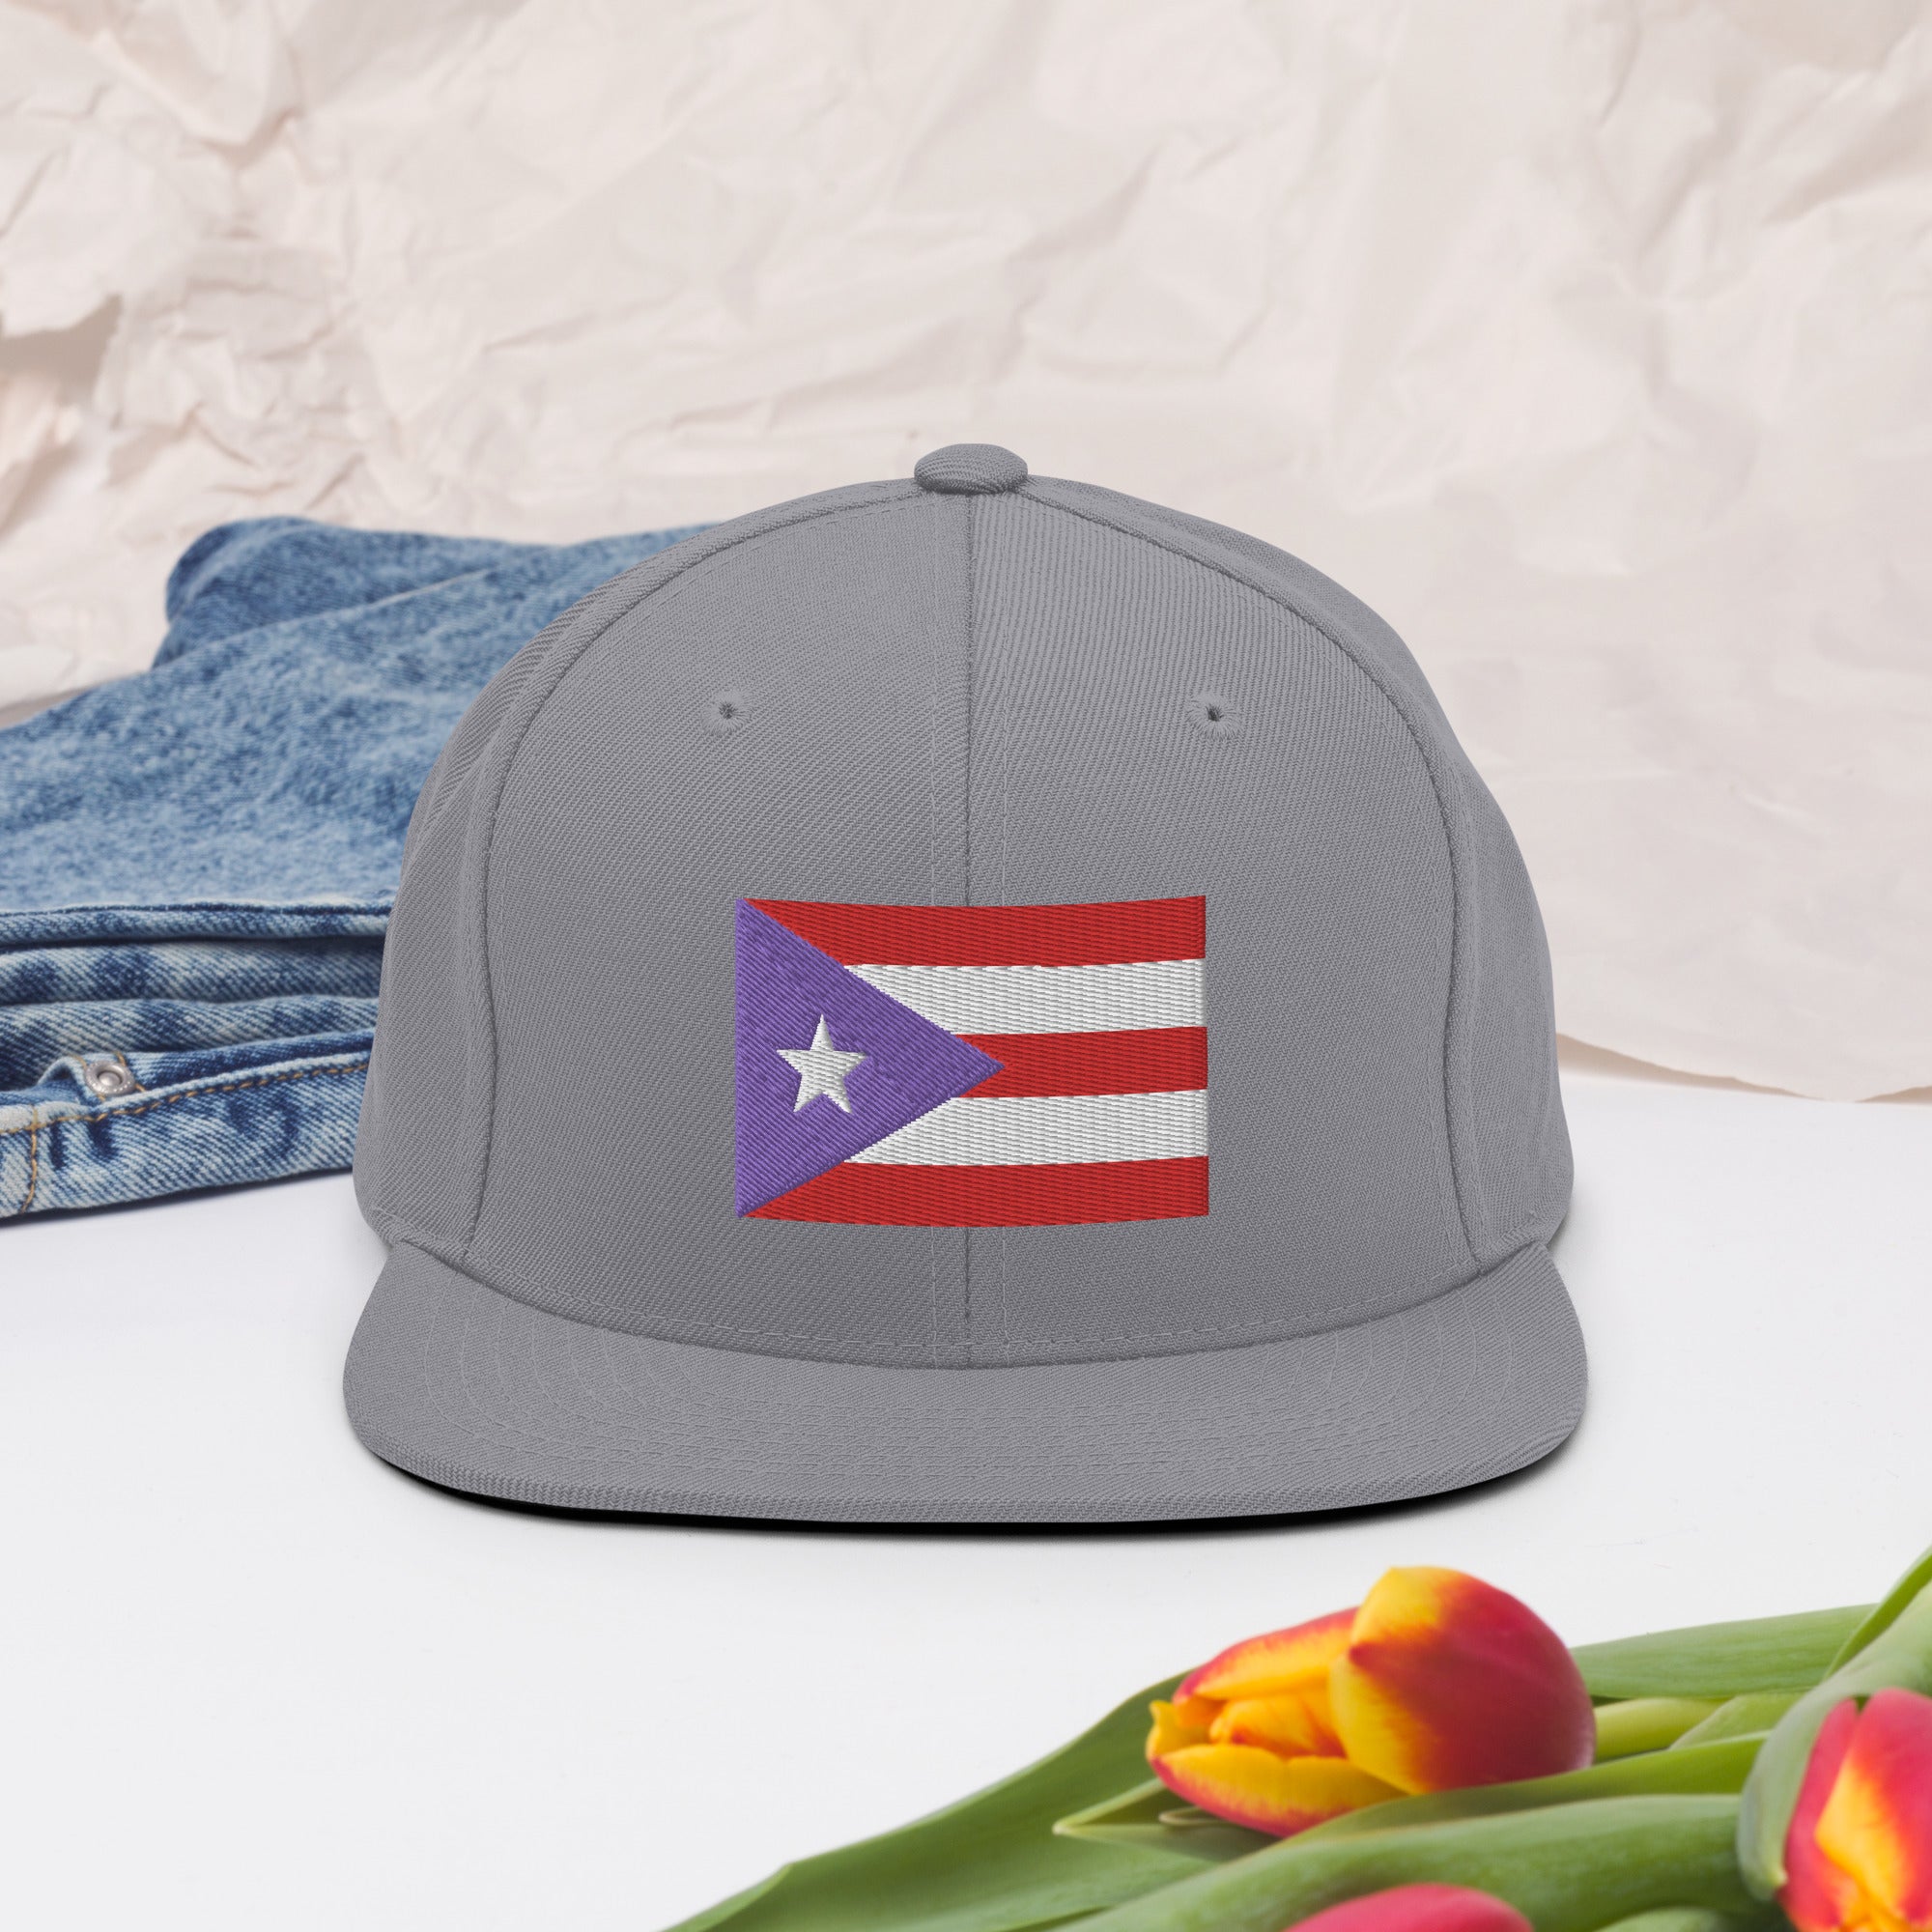 Puerto Rico Snapback Hat